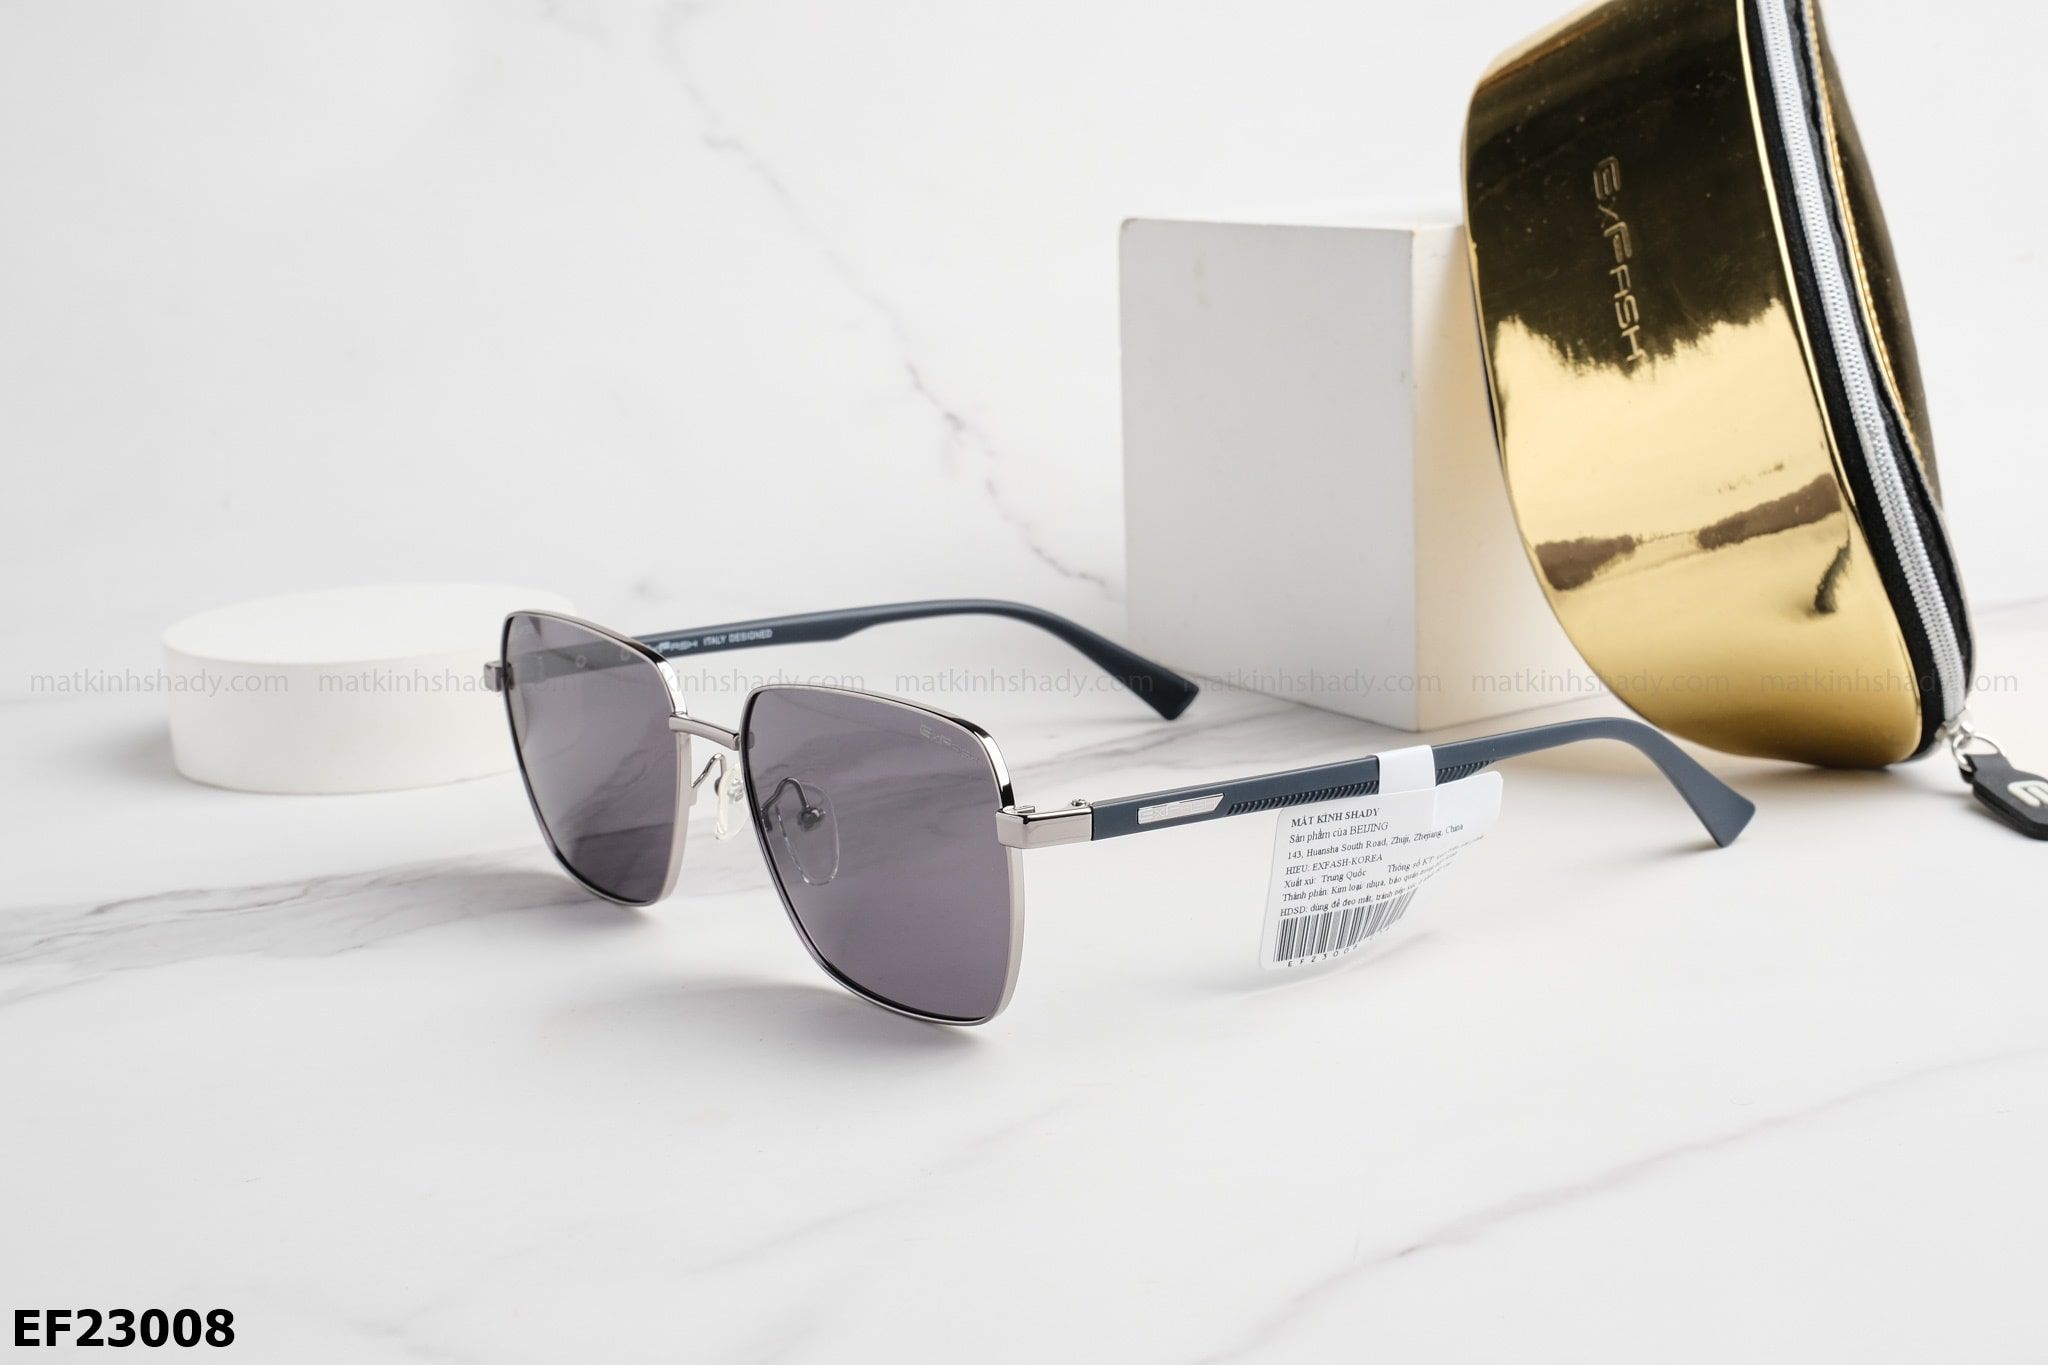  Exfash Eyewear - Sunglasses - EF23008 